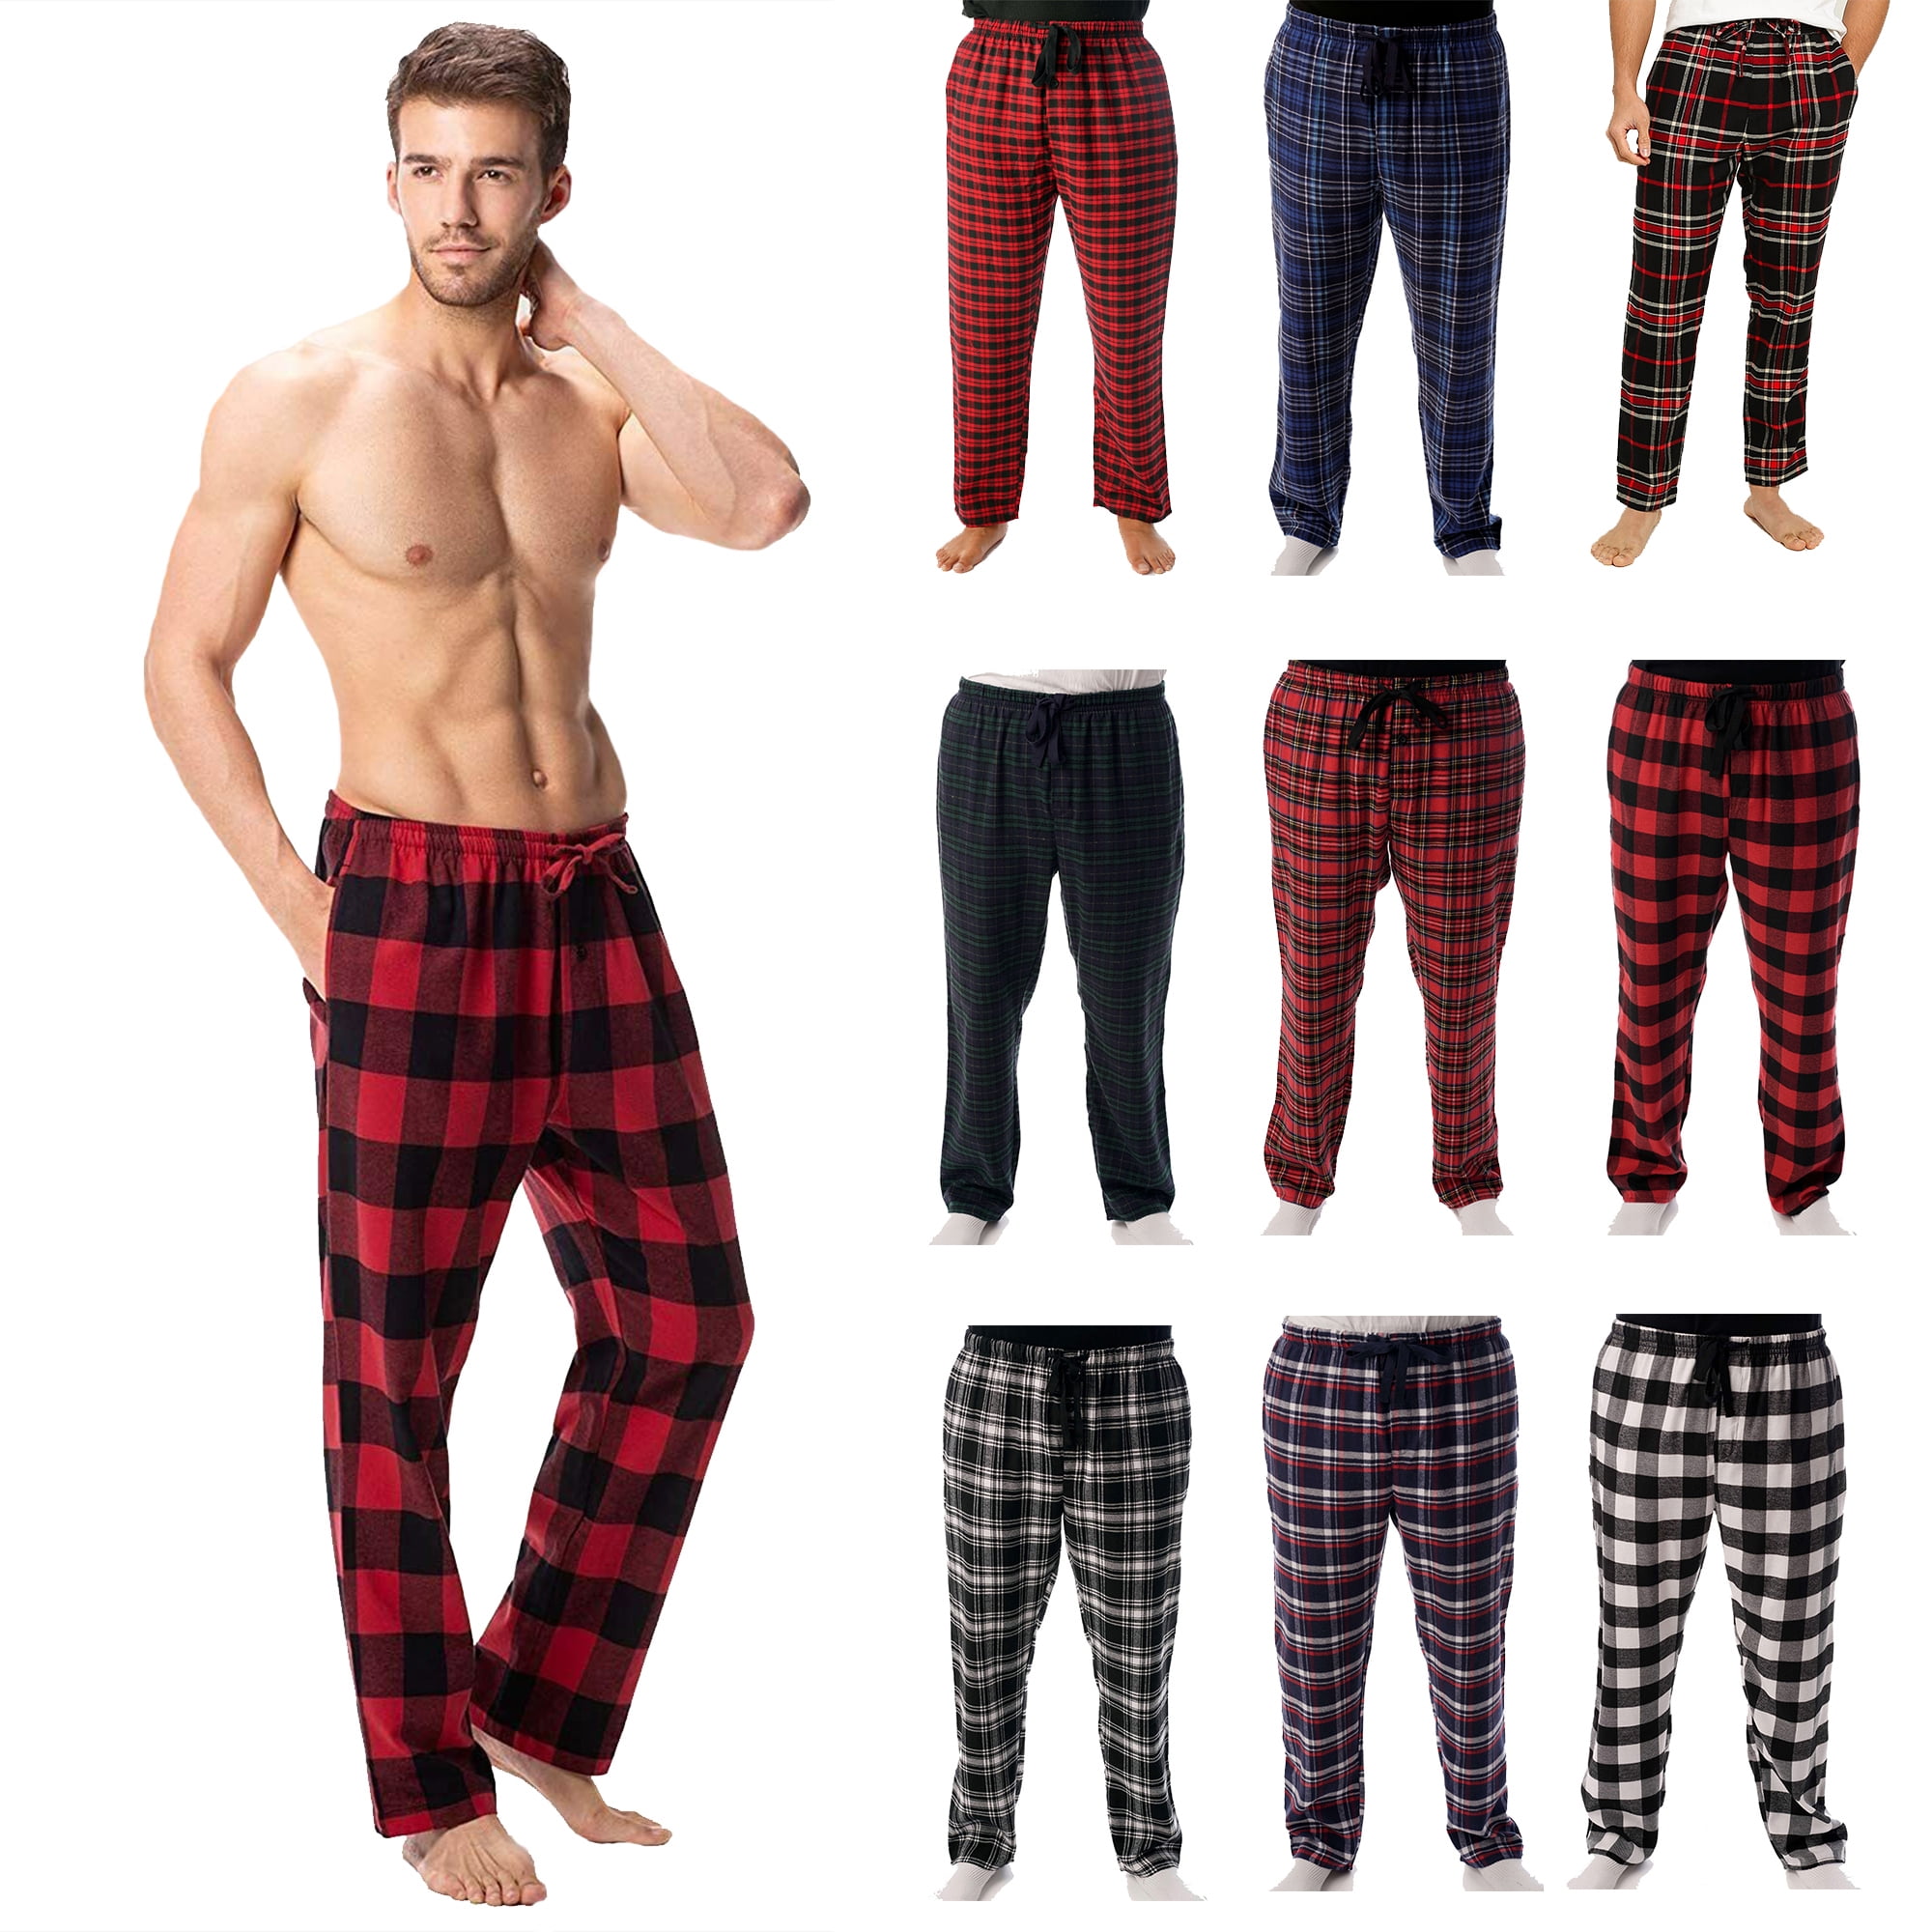 Radyan Men's Soft Stretchy Pajama Pants. Cotton Nightwear Pajama. Boy’s ...